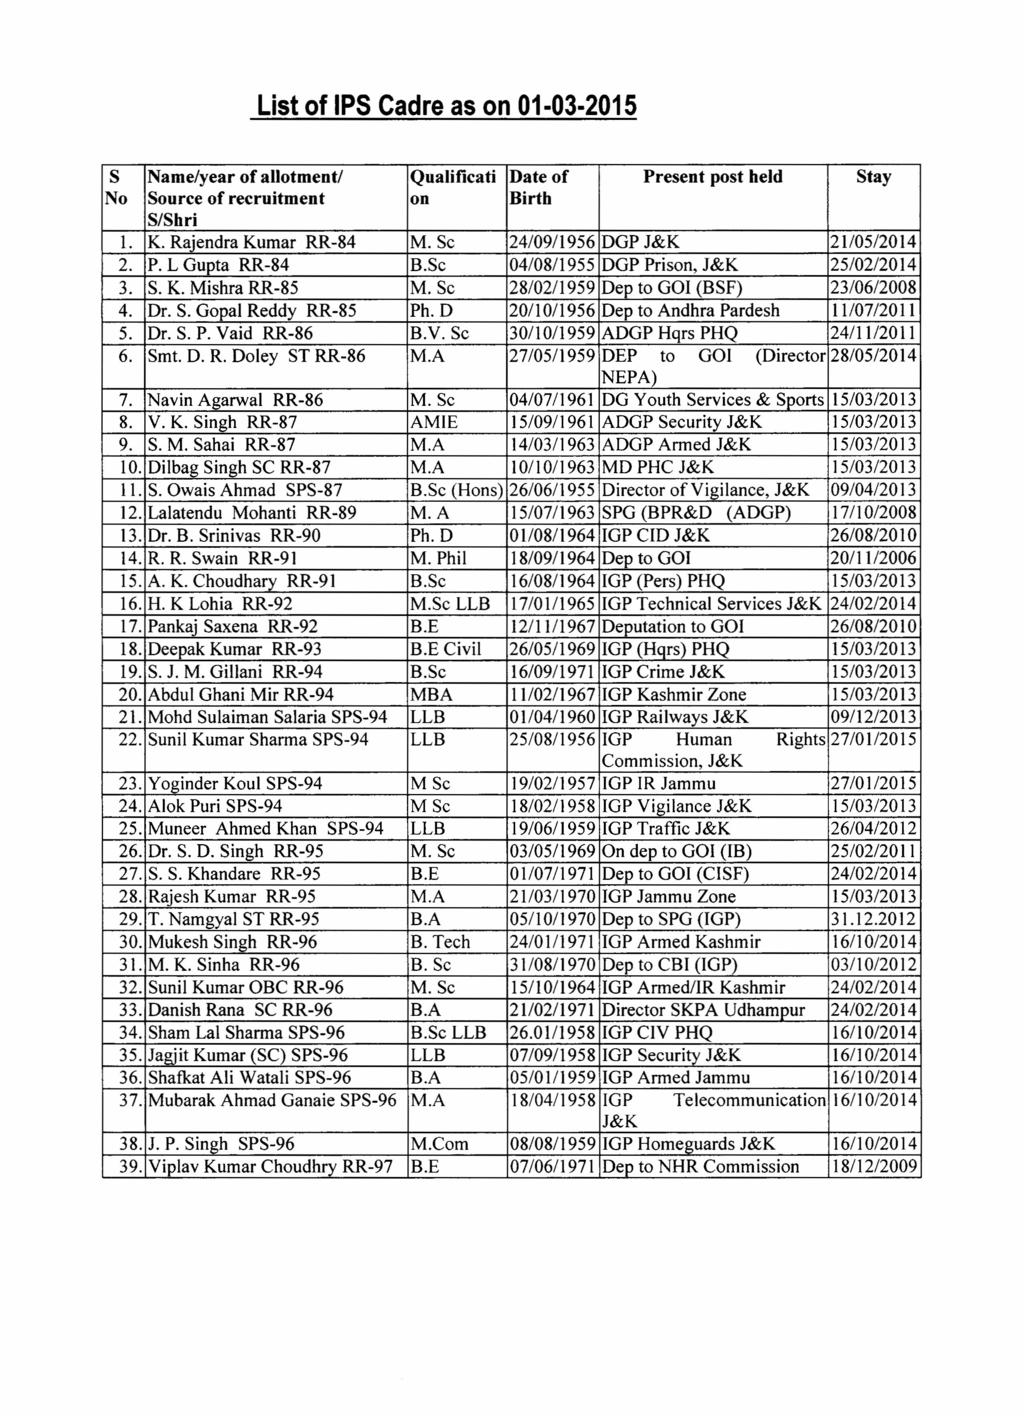 List of IPS Cadre as on 01-03-2015 S No I. 2. 3. 4. 5. 6. Name/year of allotment/ Source of recruitment S/Shri K. Rajendra Kumar RR-84 P. L Gupta RR -84 S. K. Mishra RR-85 Dr. S. Gopal Reddy RR-85 Dr.